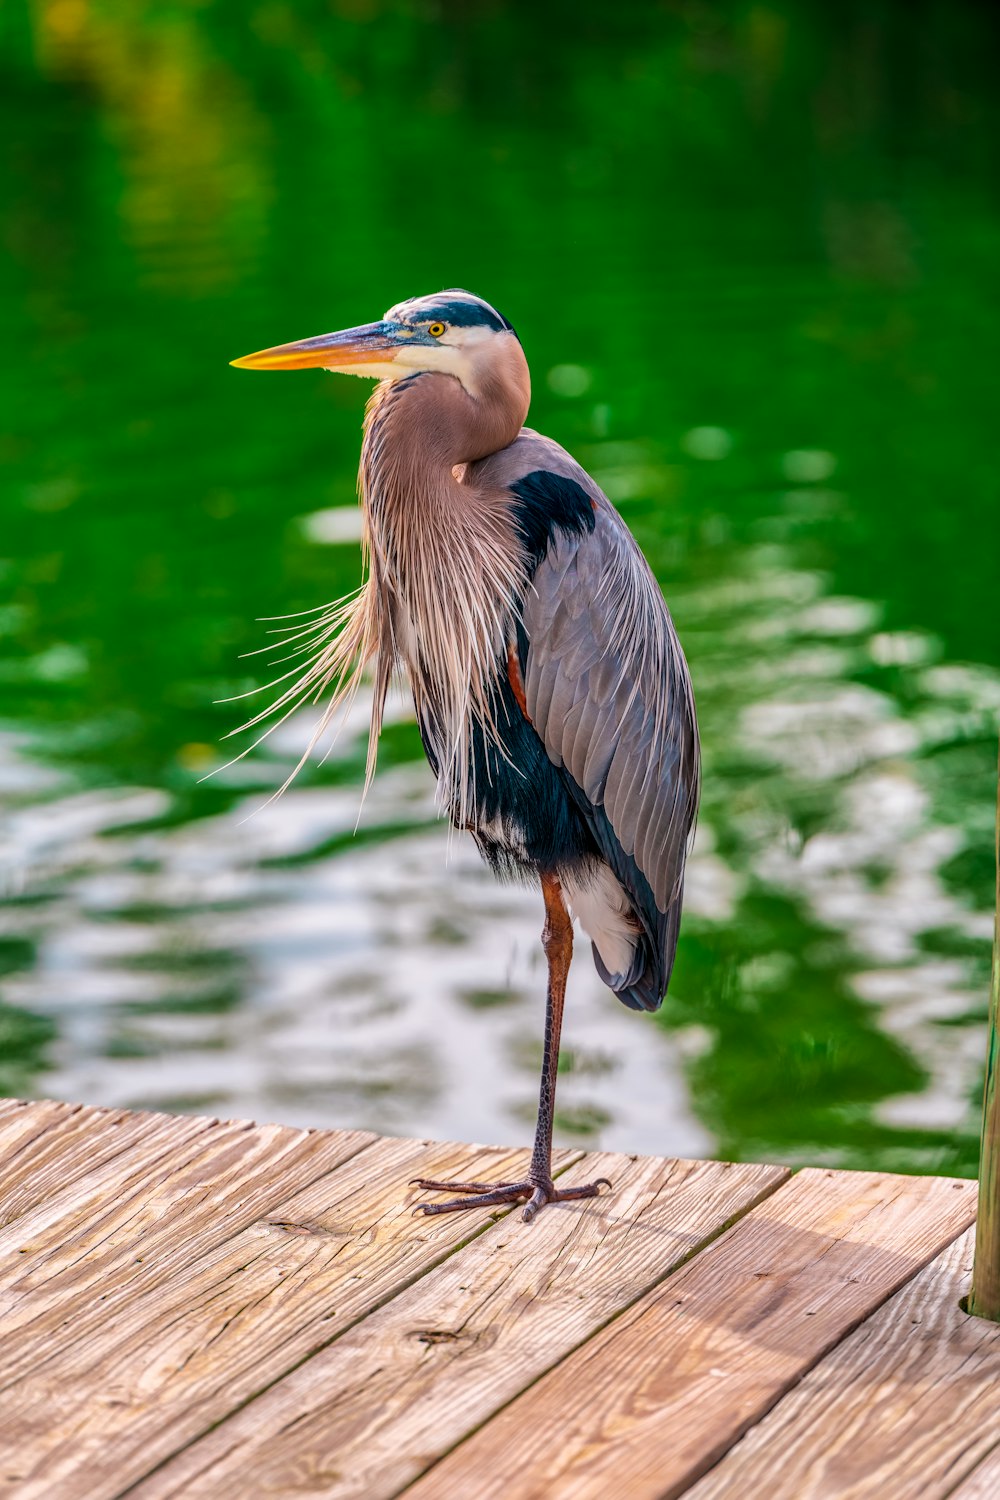 a bird standing on a wood surface